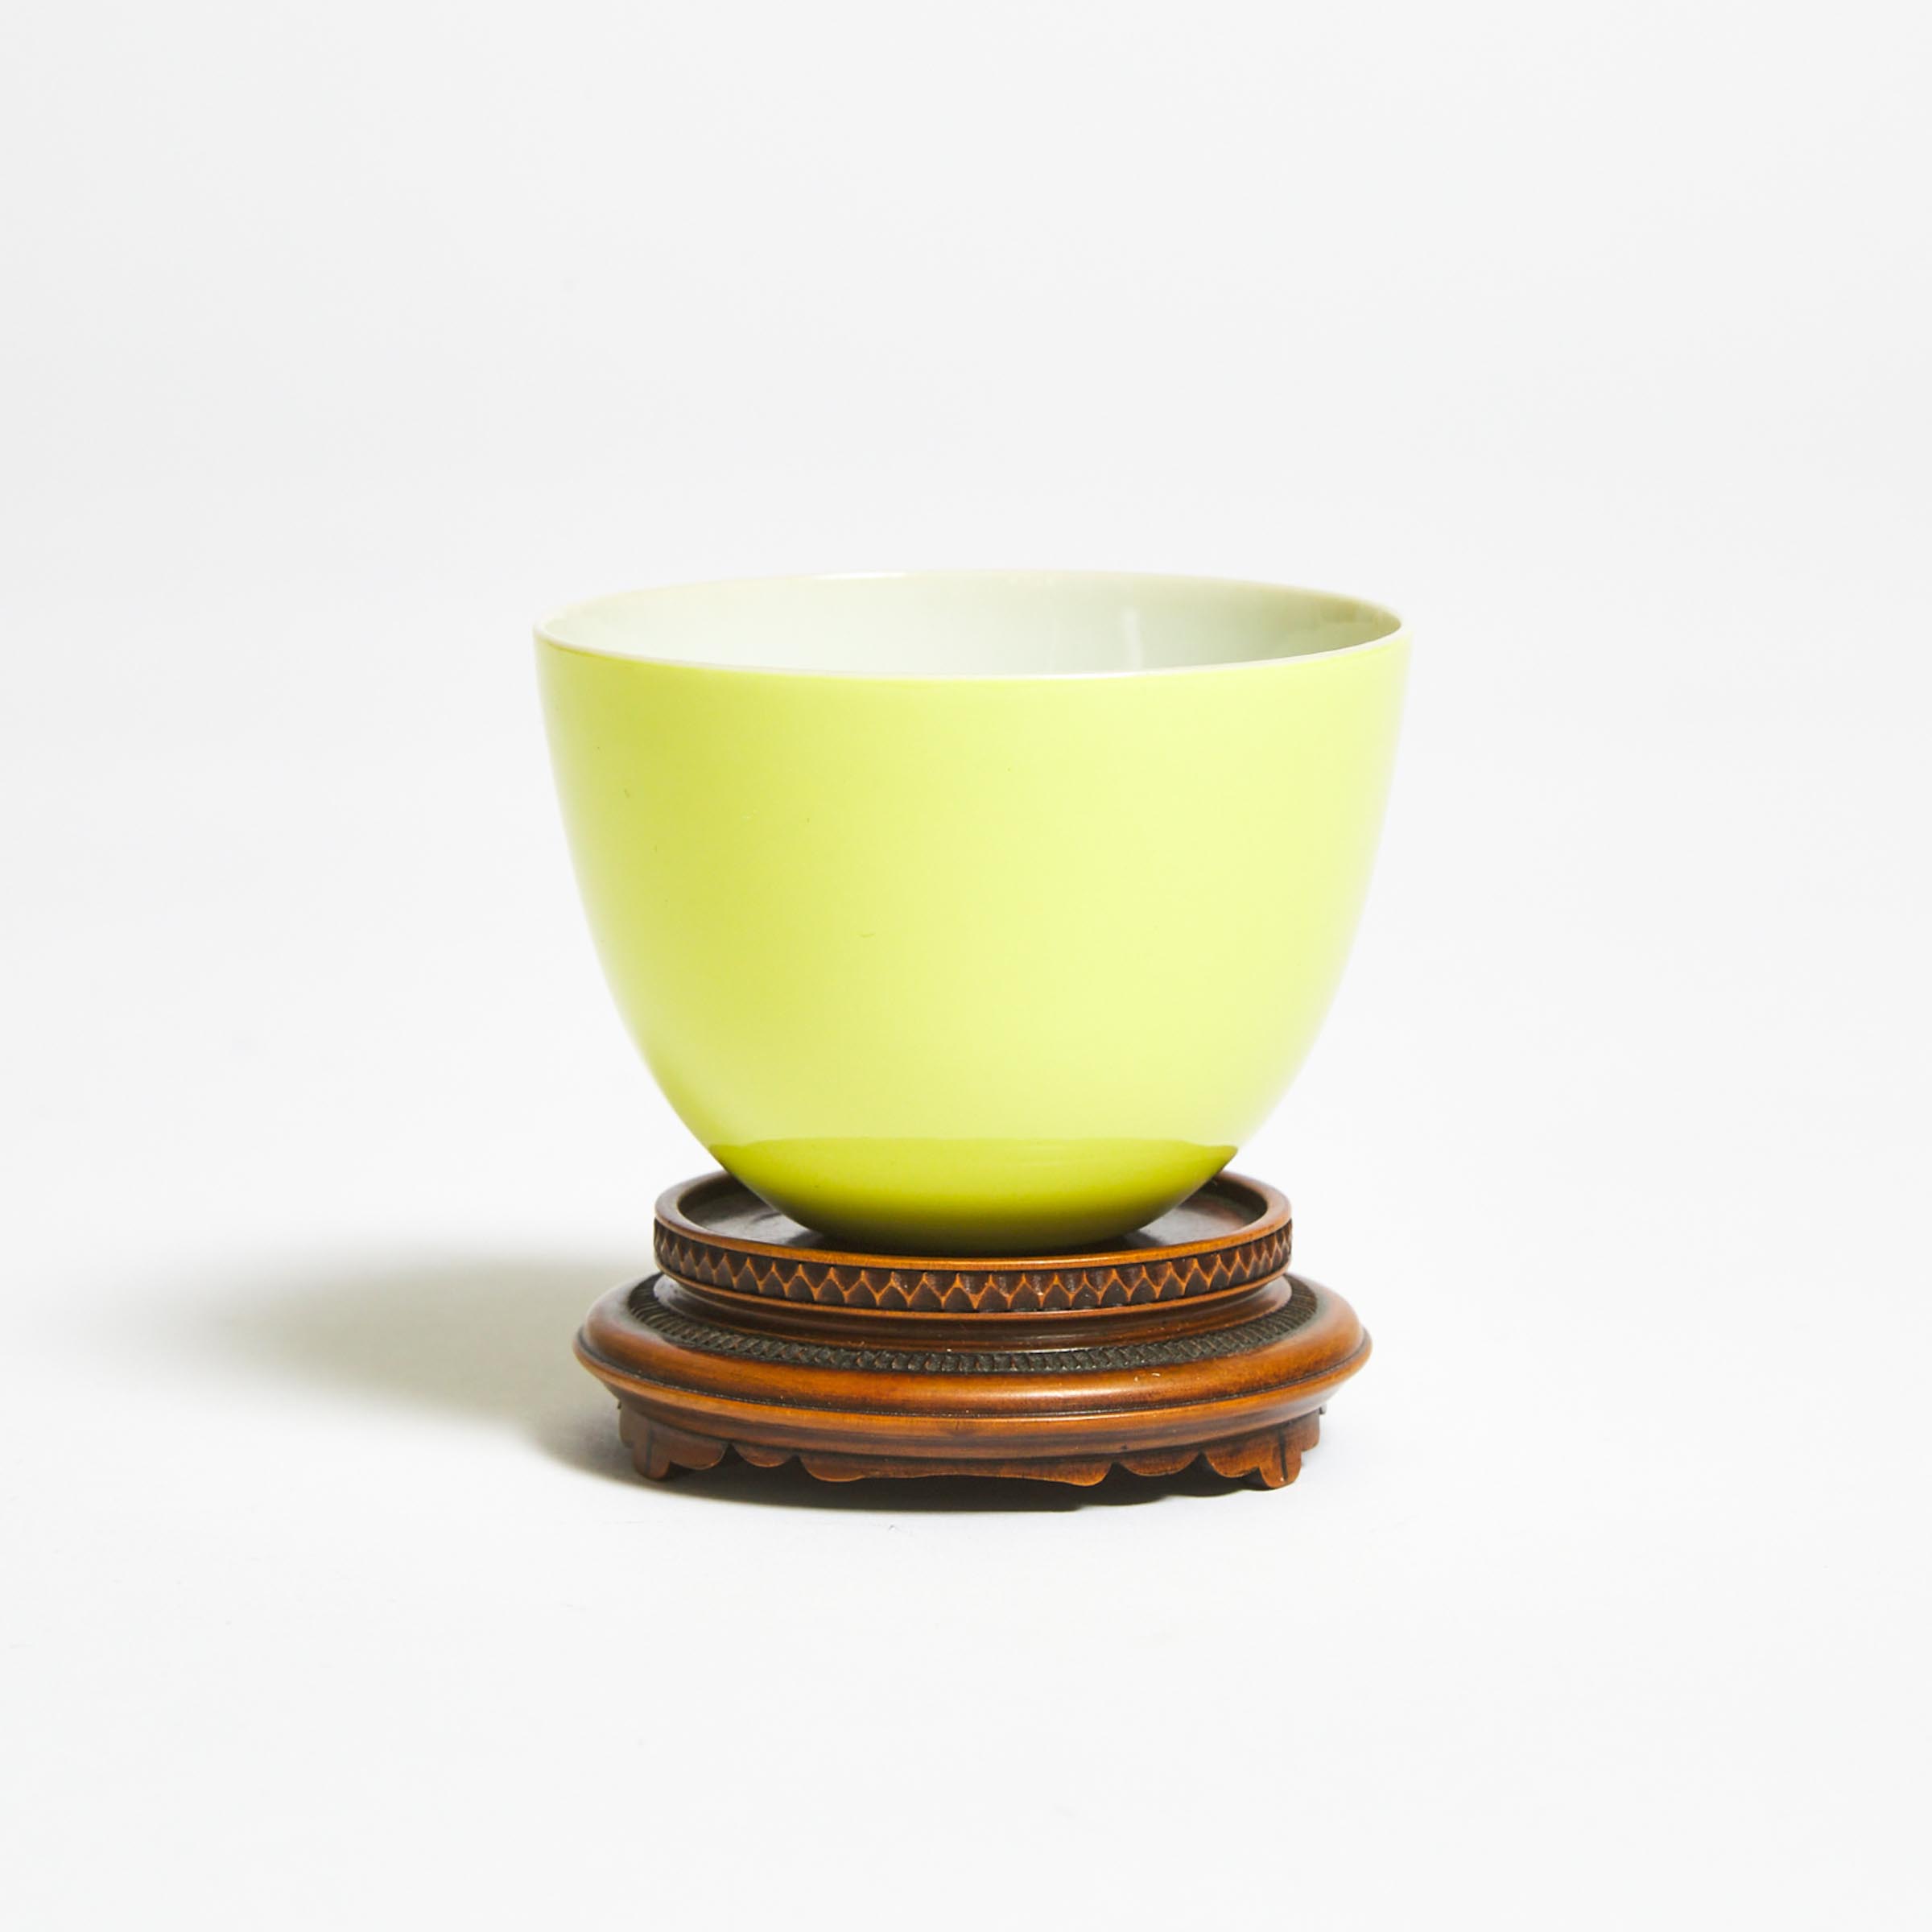 A Small Lemon-Yellow Enameled Cup, Ning Jing Tang Mark